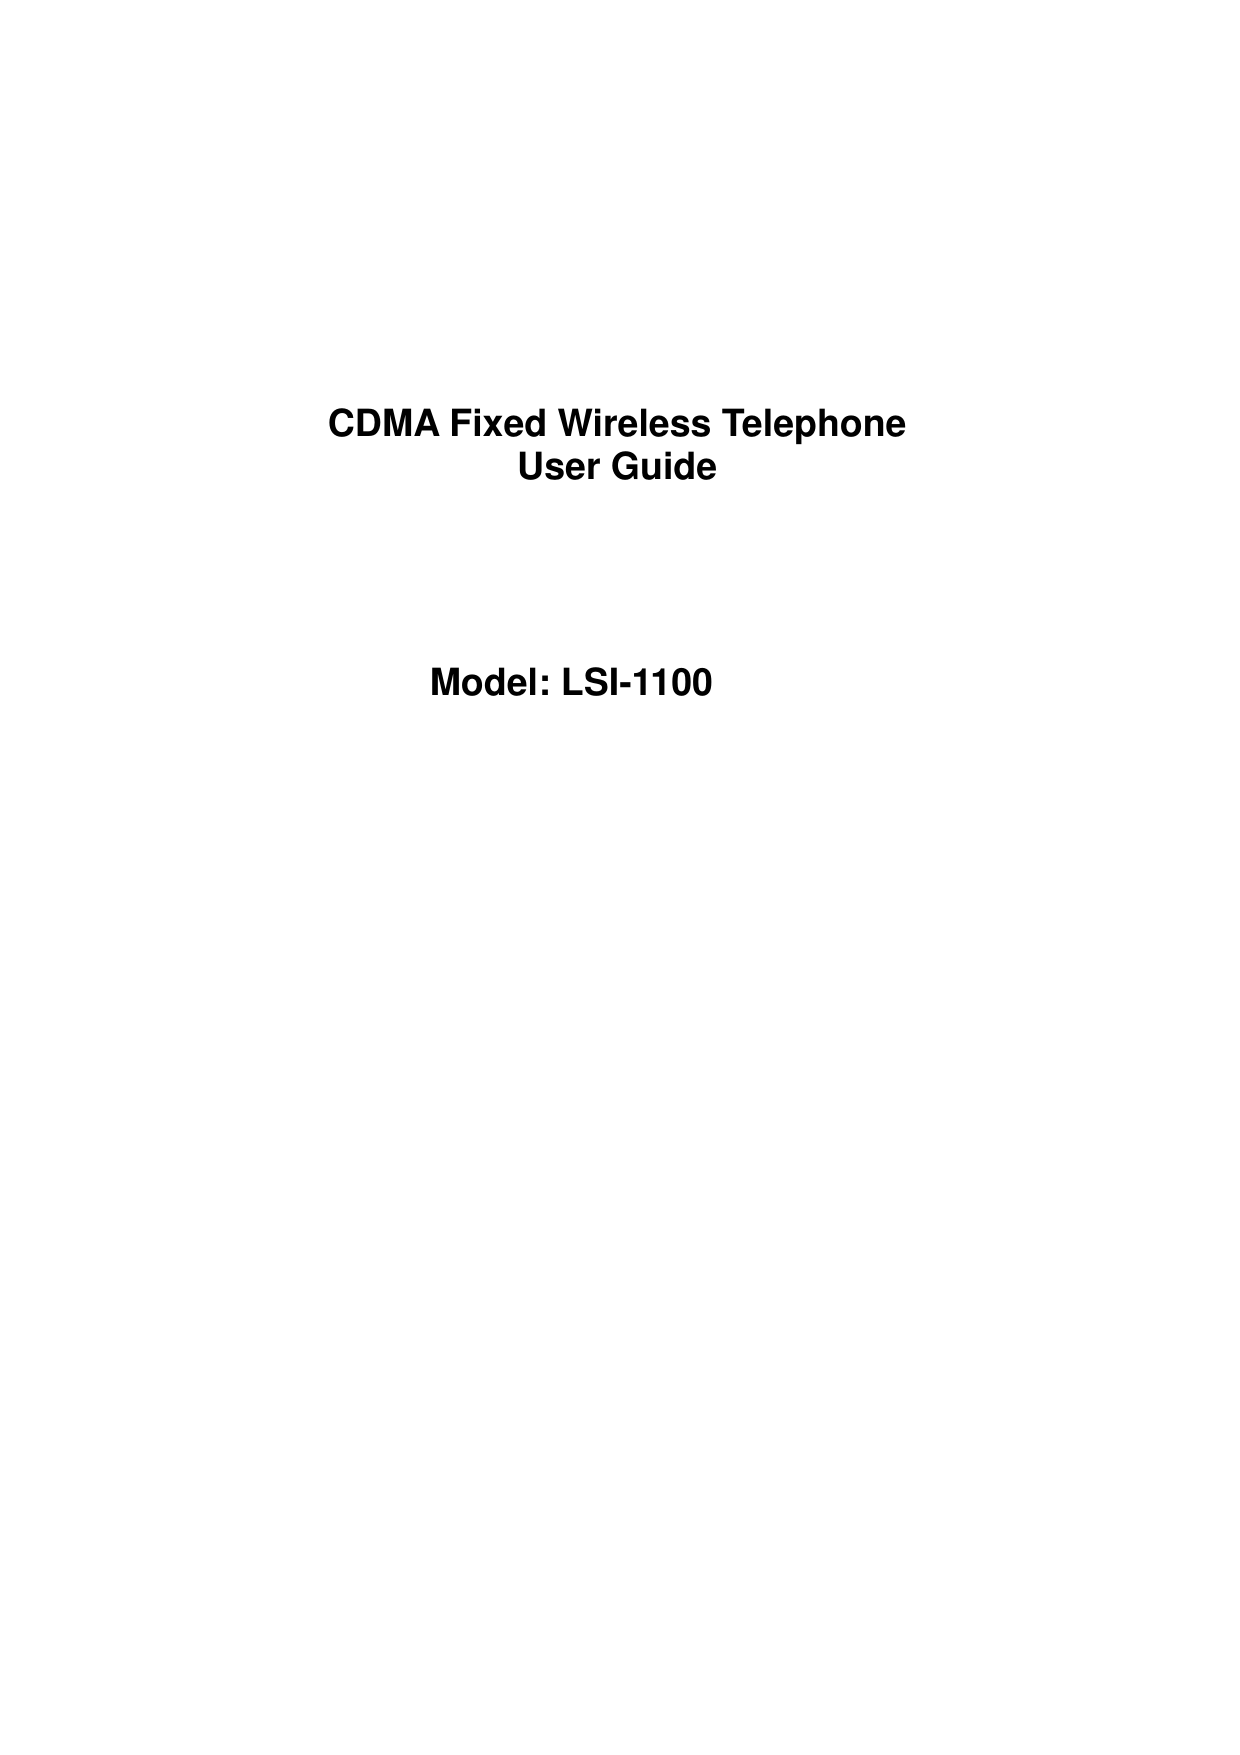 CDMA Fixed Wireless Telephone User Guide     Model: LSI-1100